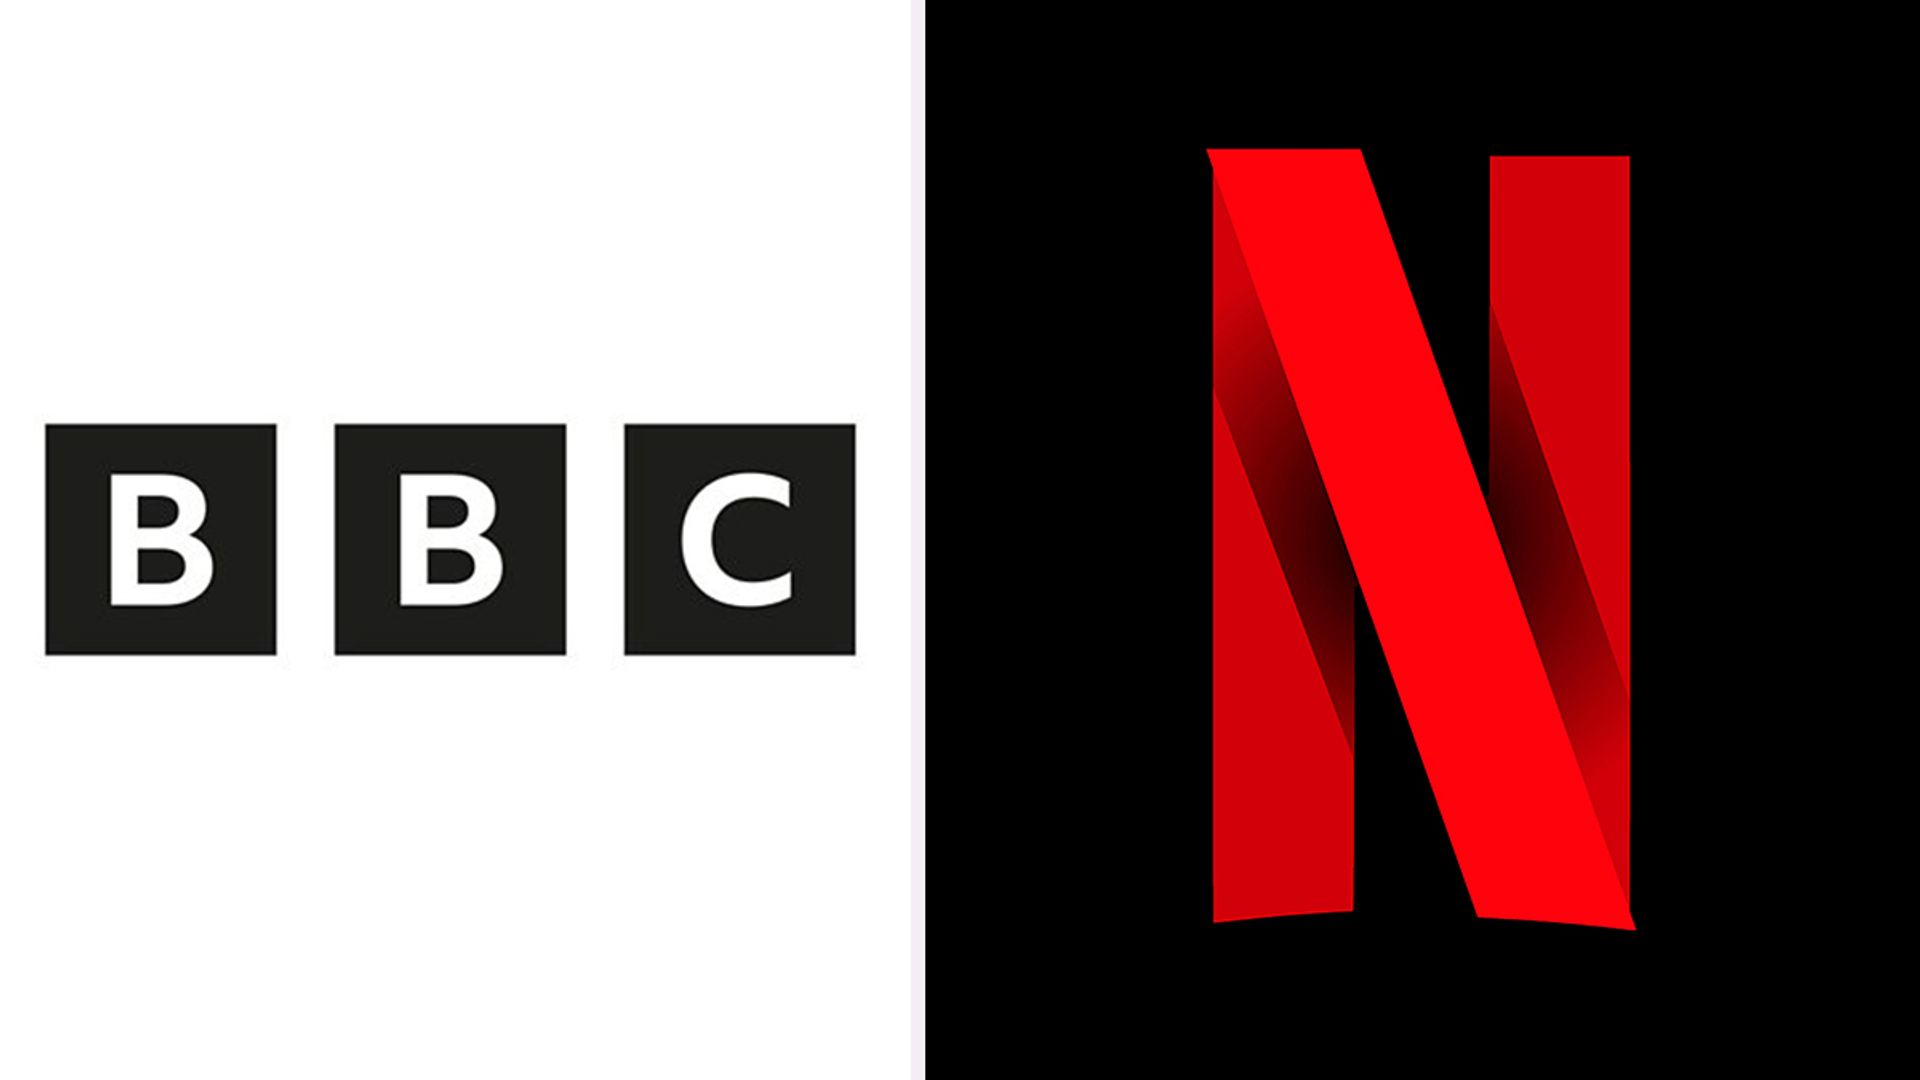 BBC and Netflix logos